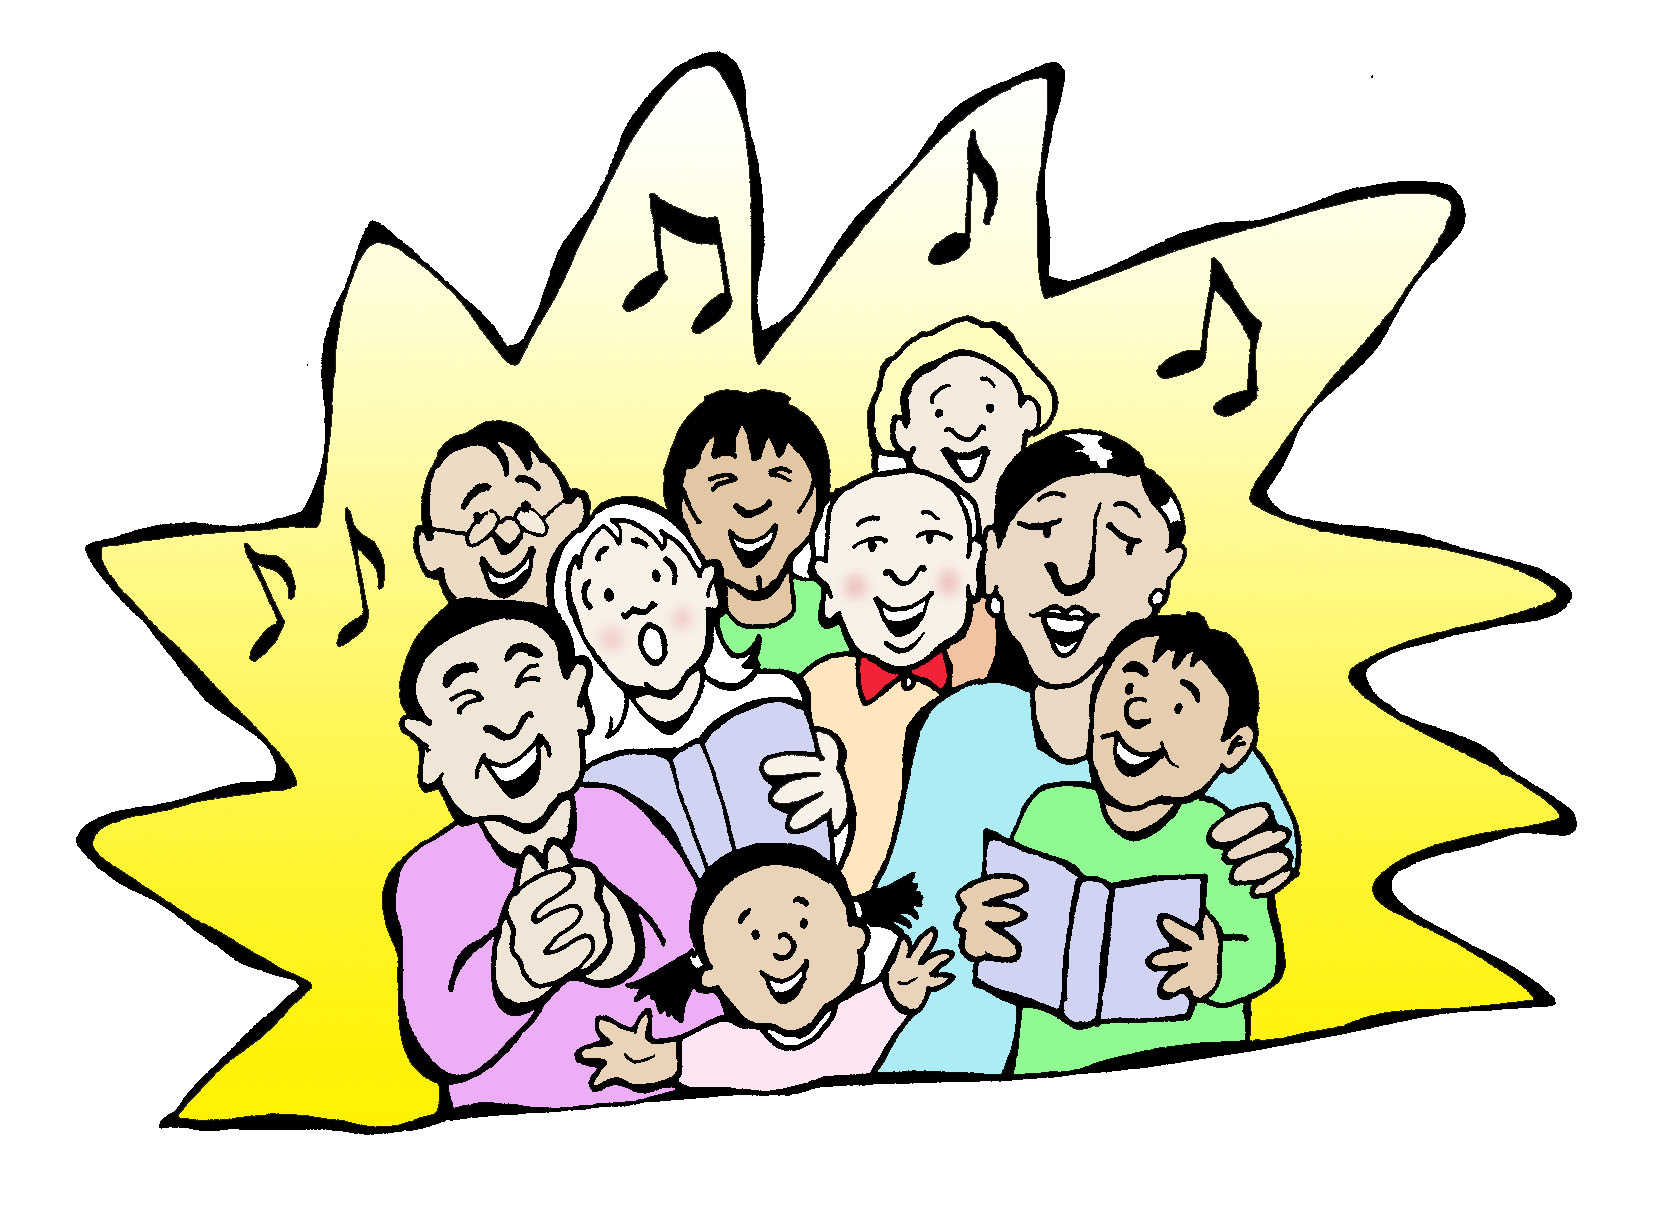 Animated Choir Singing drawing free image